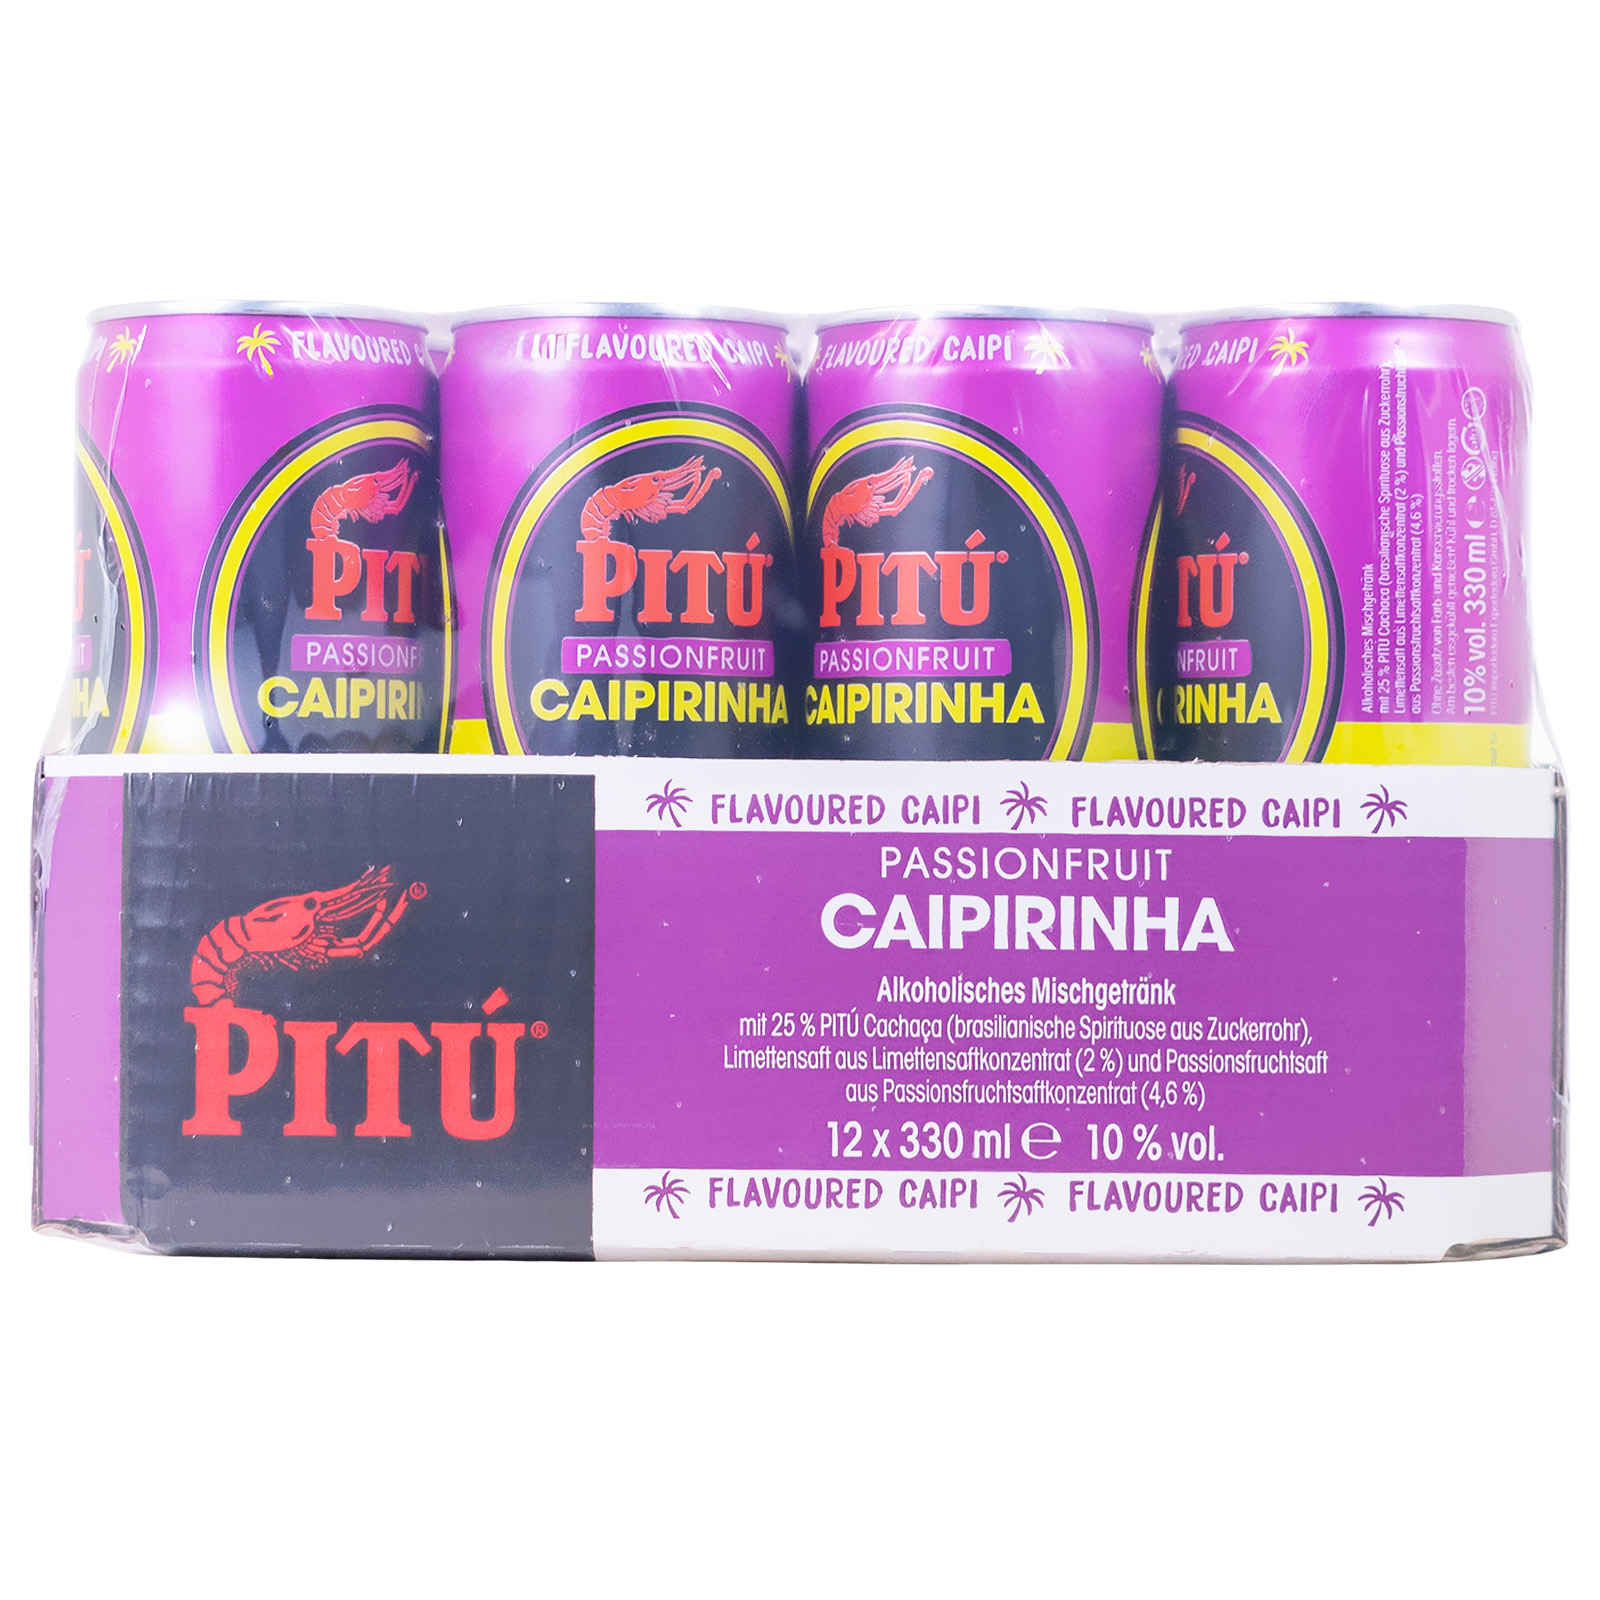 Paket [12 x 0,33L] Pitu Passionfruit Caipirinha Dose - 3,96L 10% vol